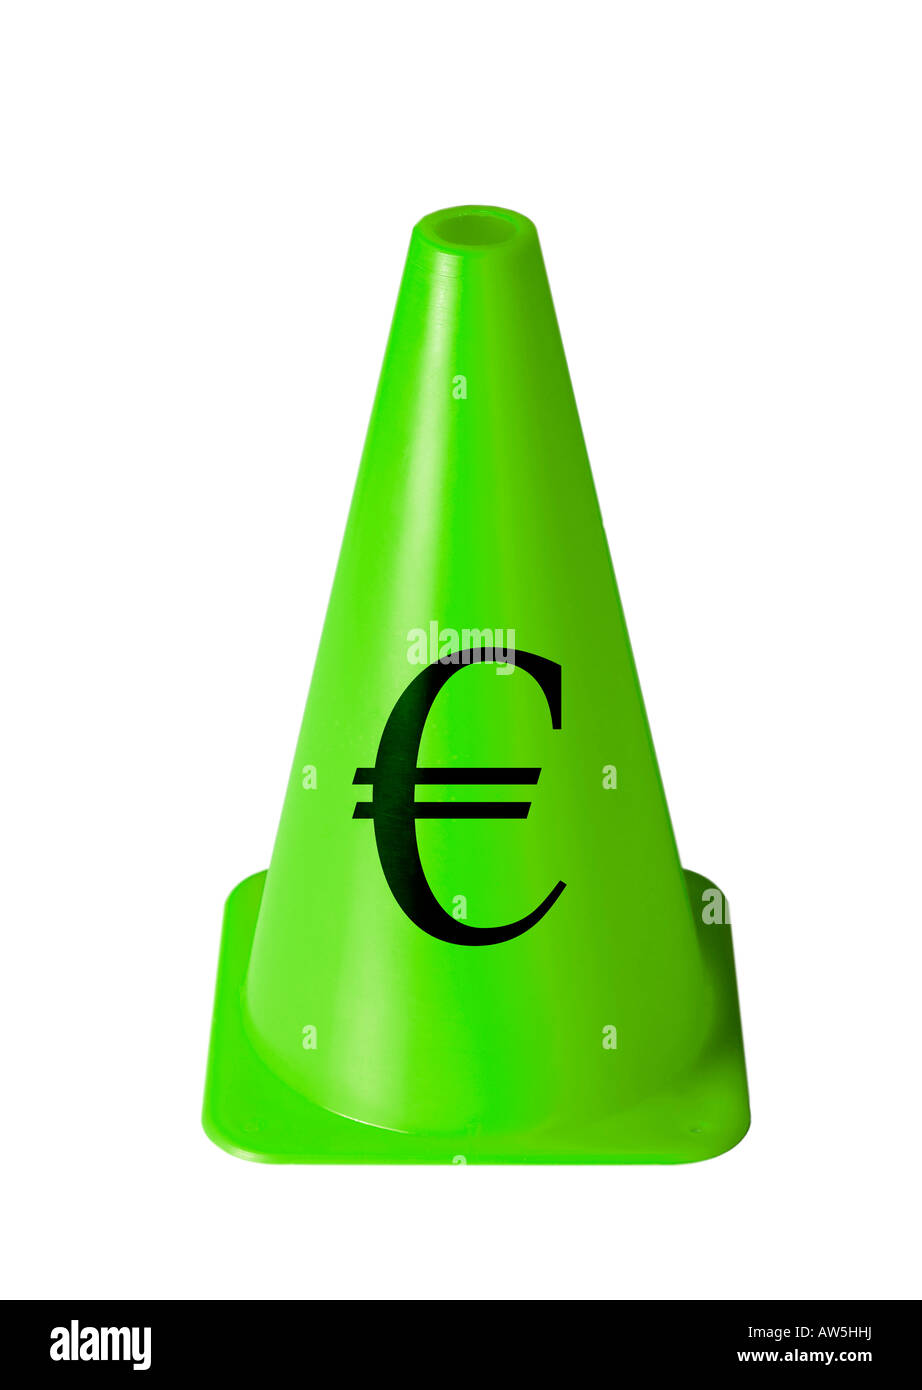 Cône de circulation vert vif avec symbole euro en noir Banque D'Images